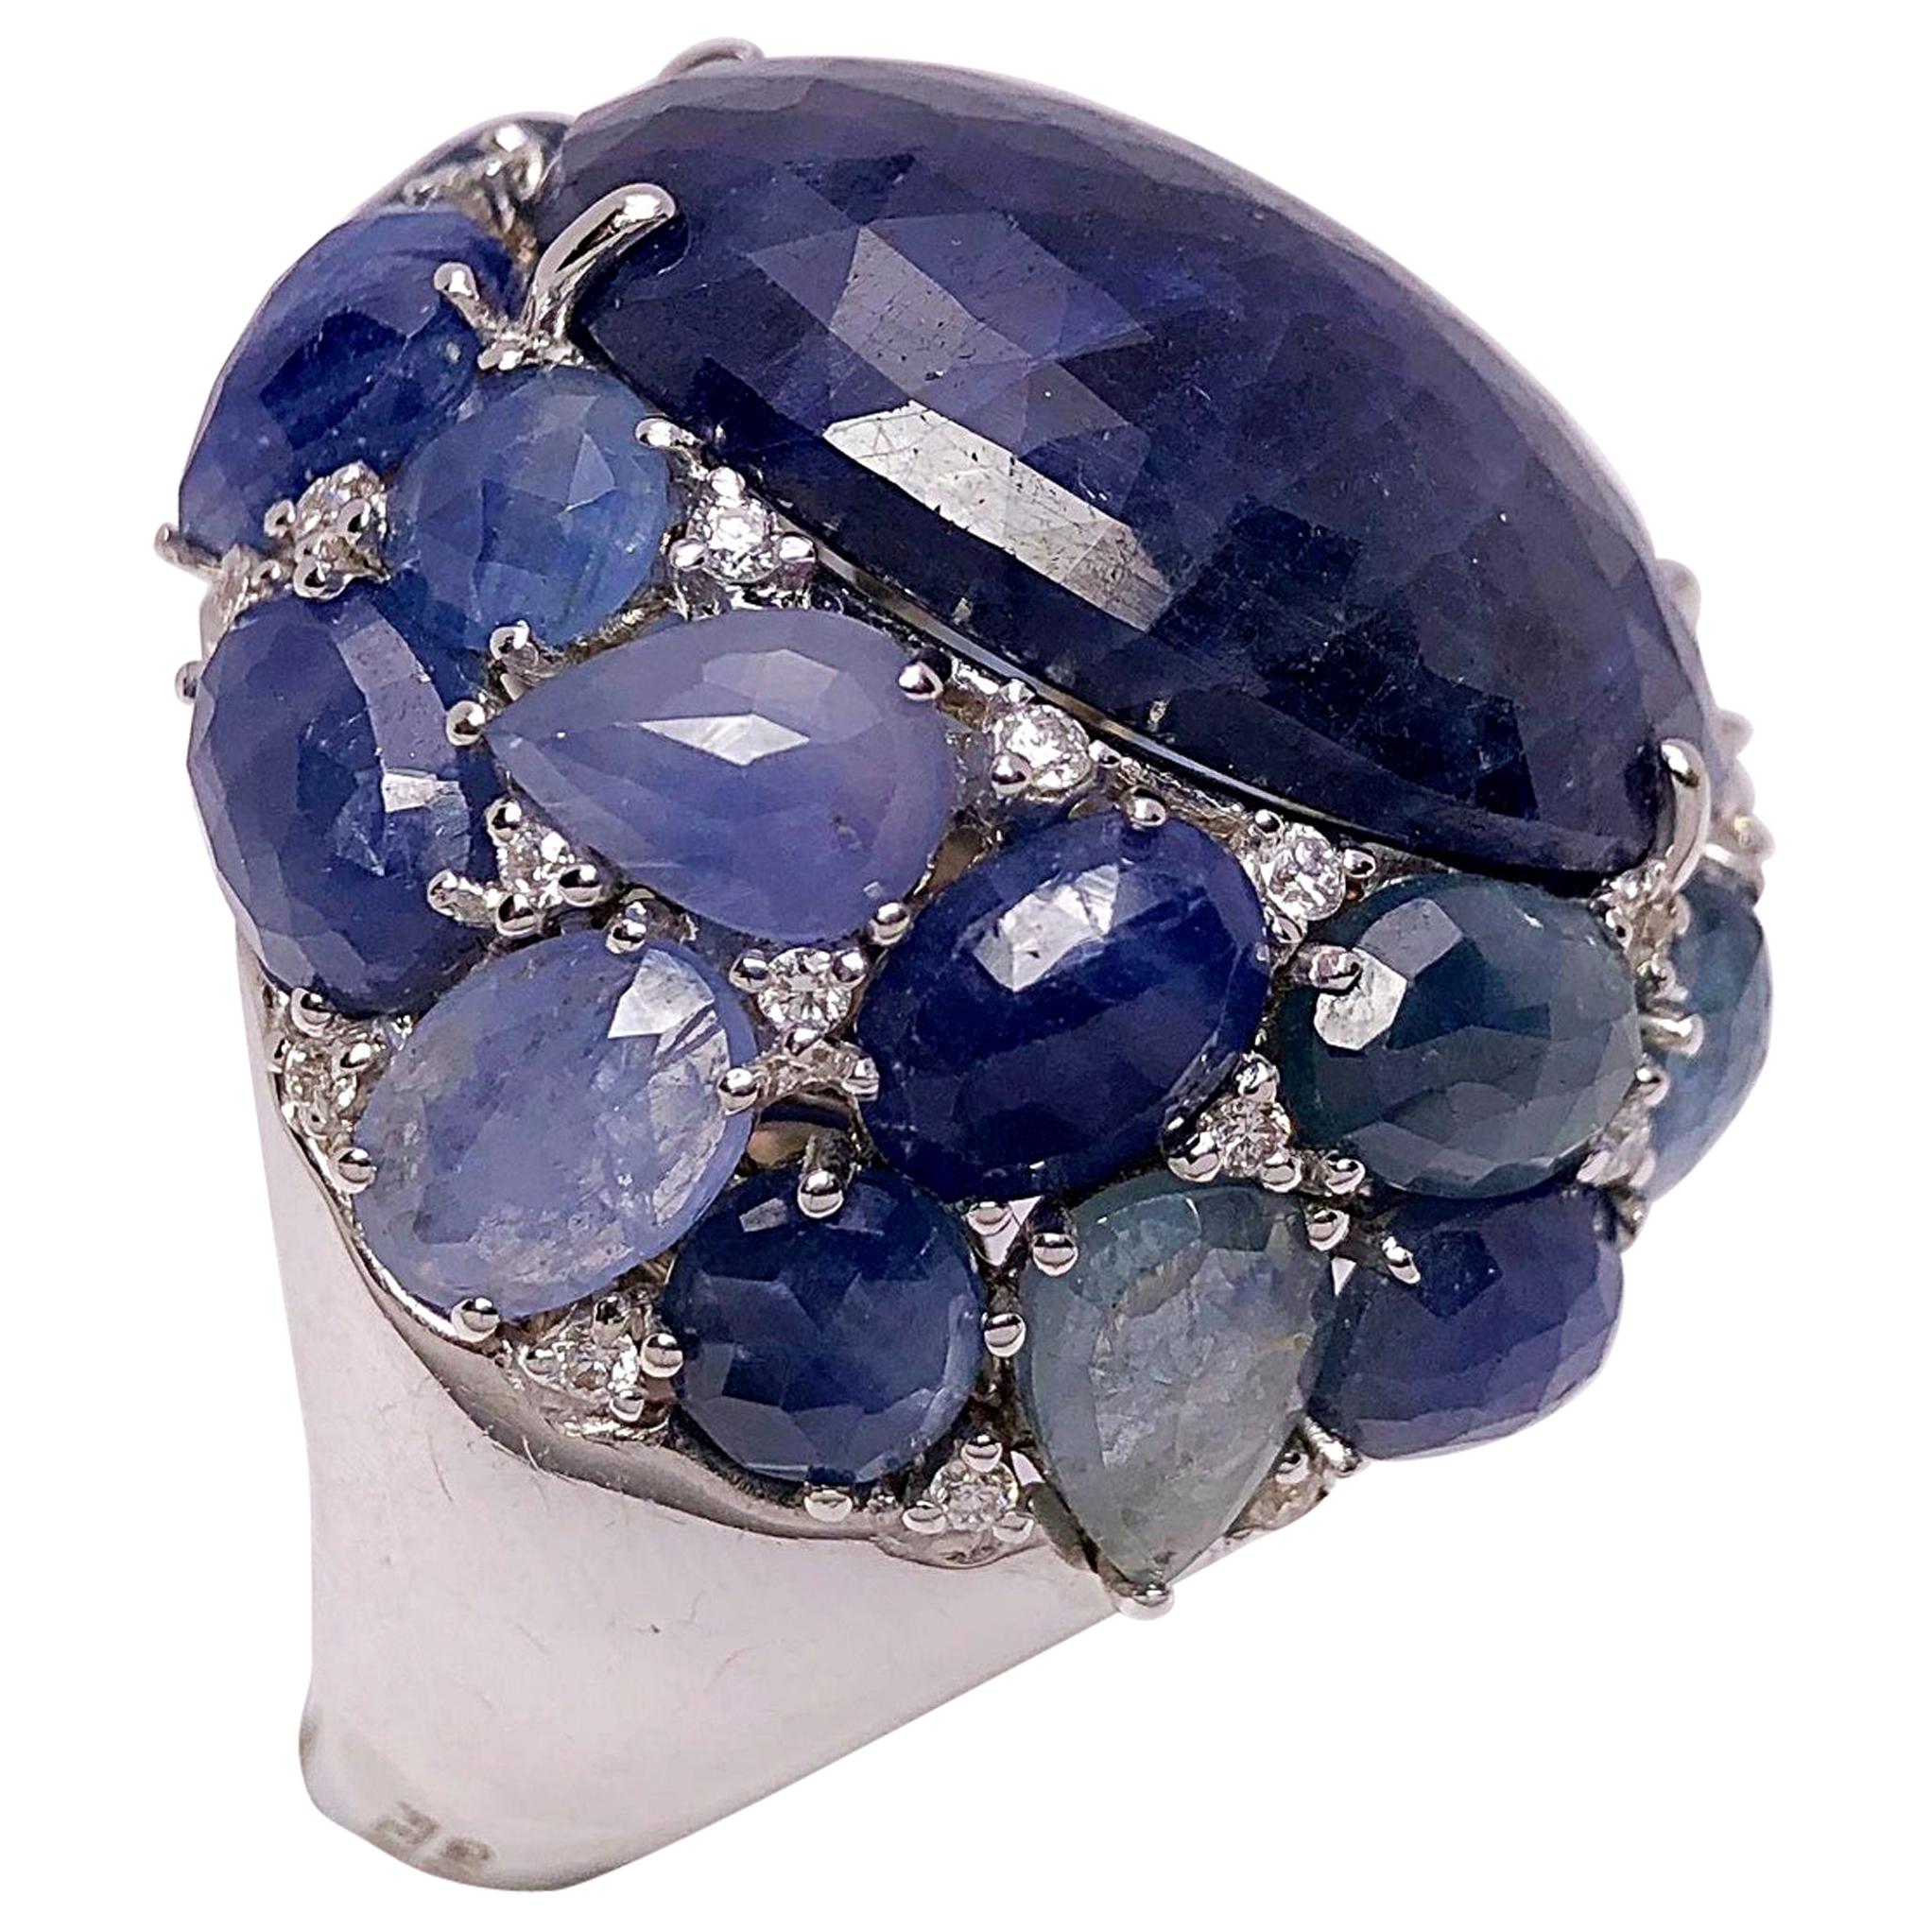 Giovanni Ferraris Bague dôme en or 18 carats, saphir bleu 43.8 carats et diamants